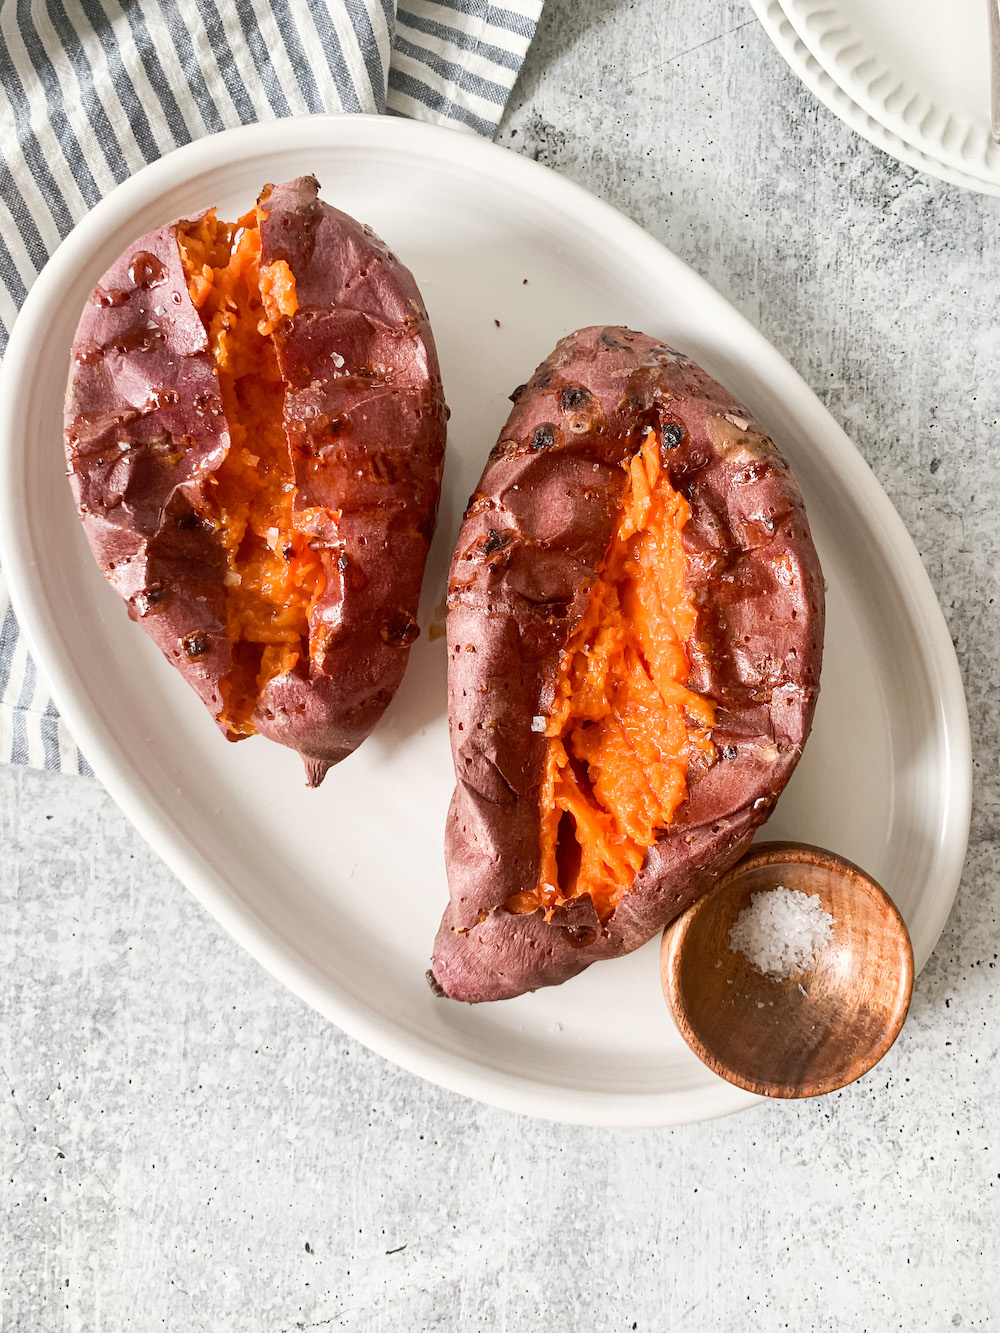 cut baked sweet potatoes with orange flesh